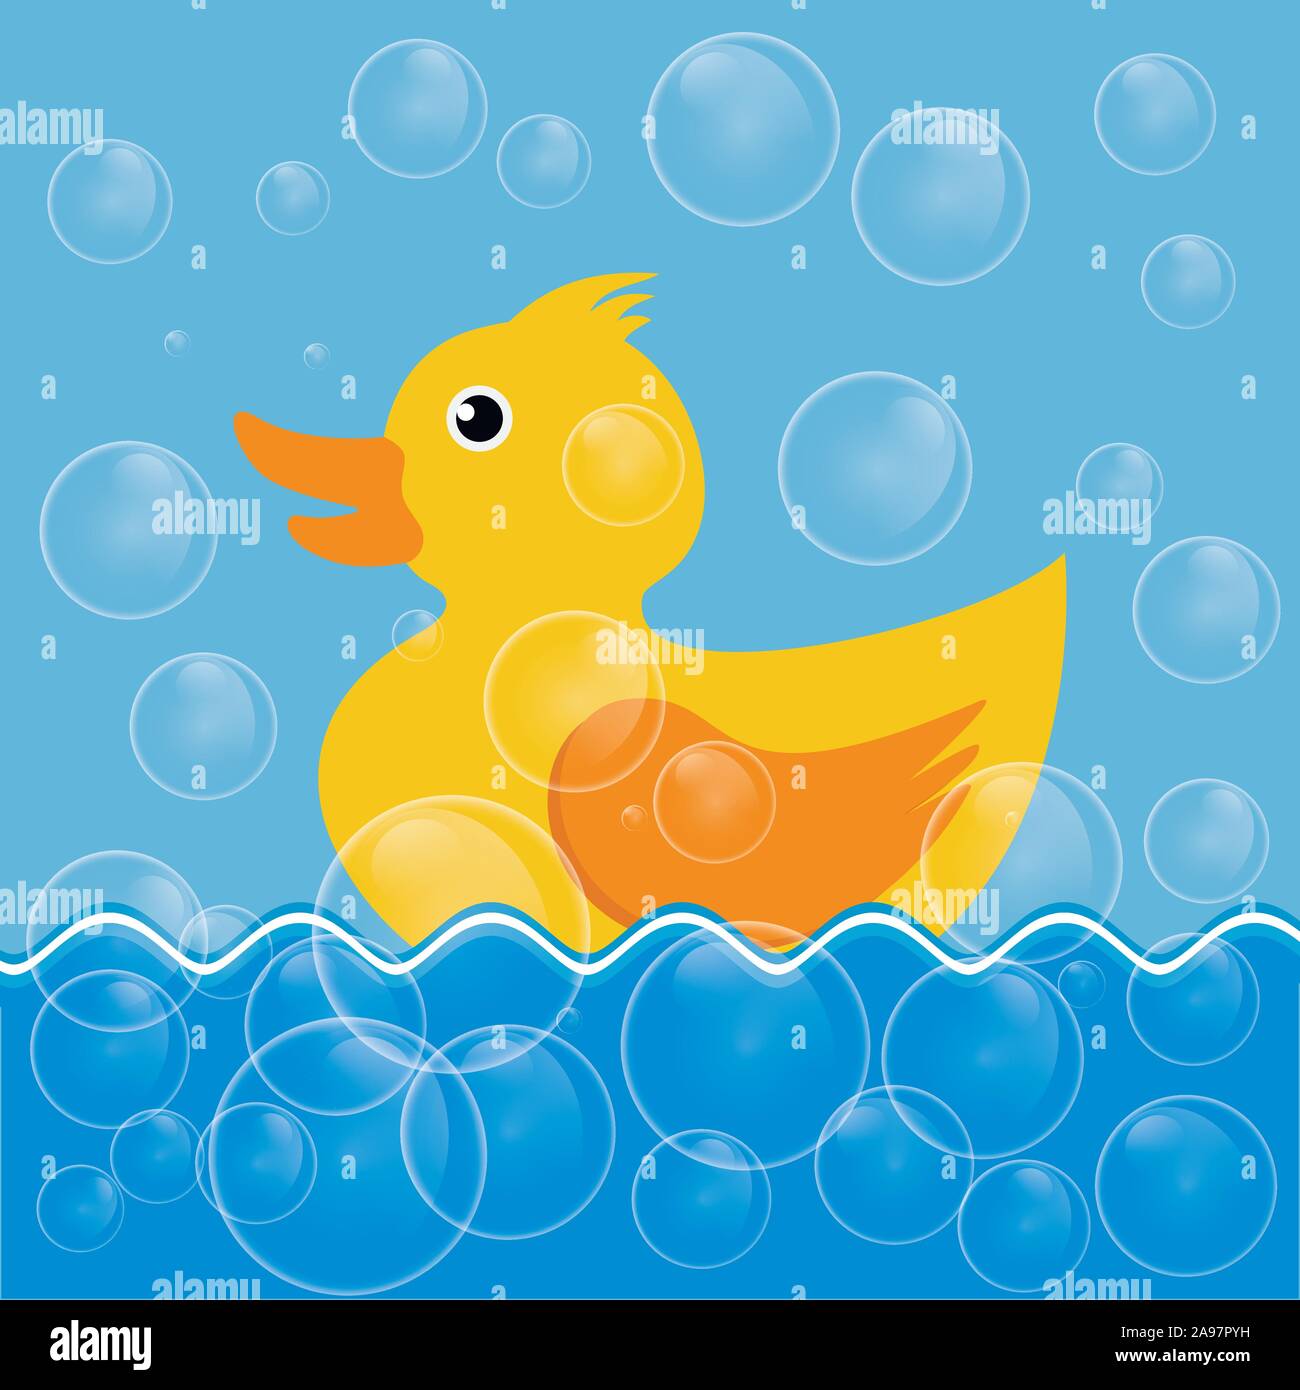 Classic yellow rubber duck, vector illustration Stock Vector